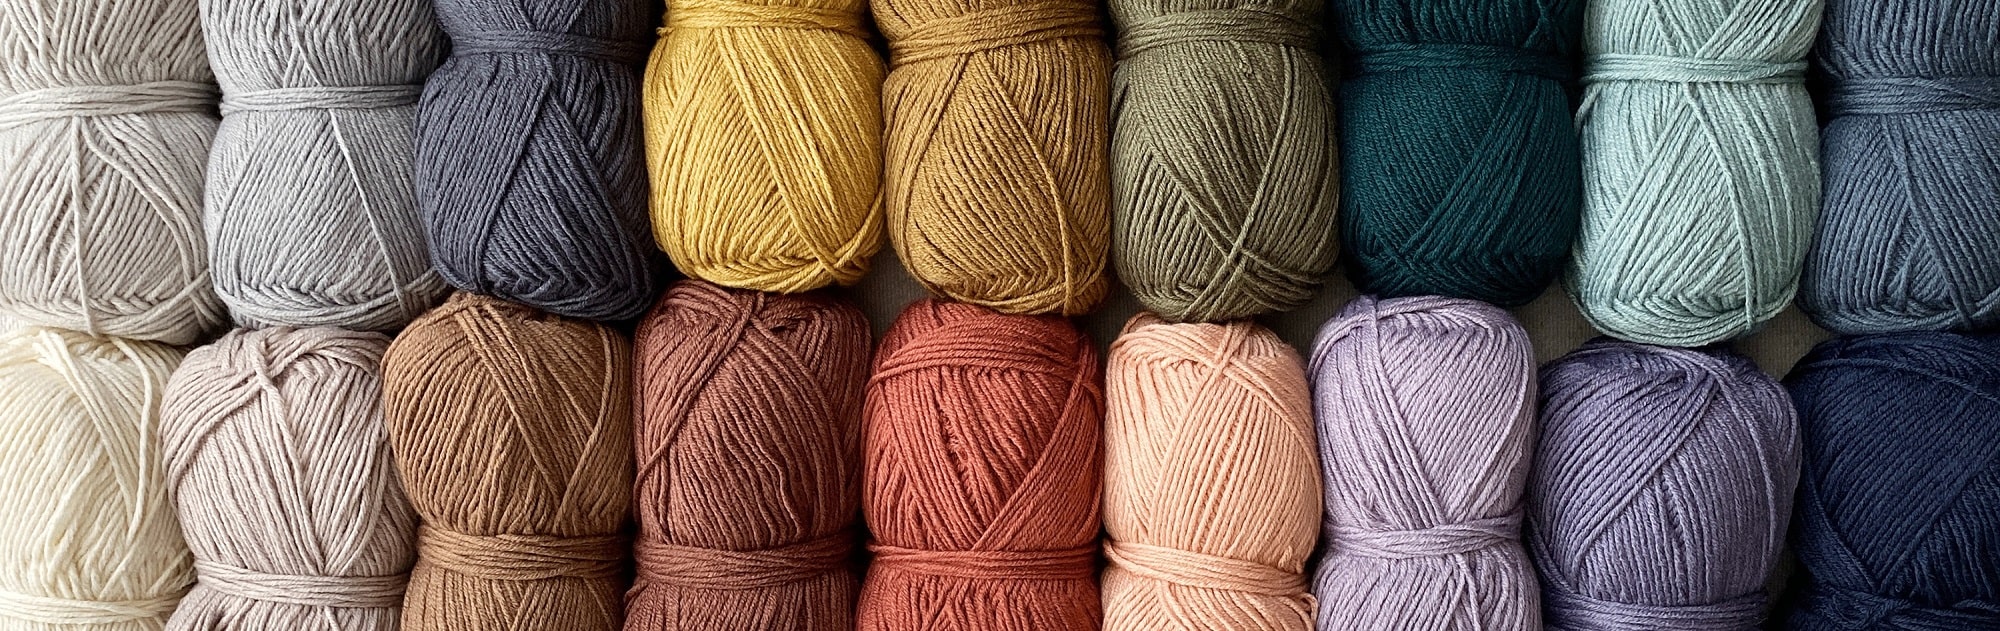 Lion Brand Yarn Heartland Yarn for Crocheting, Knitting, and Weaving,  Multicolor Yarn, 3-Pack, Hot Springs